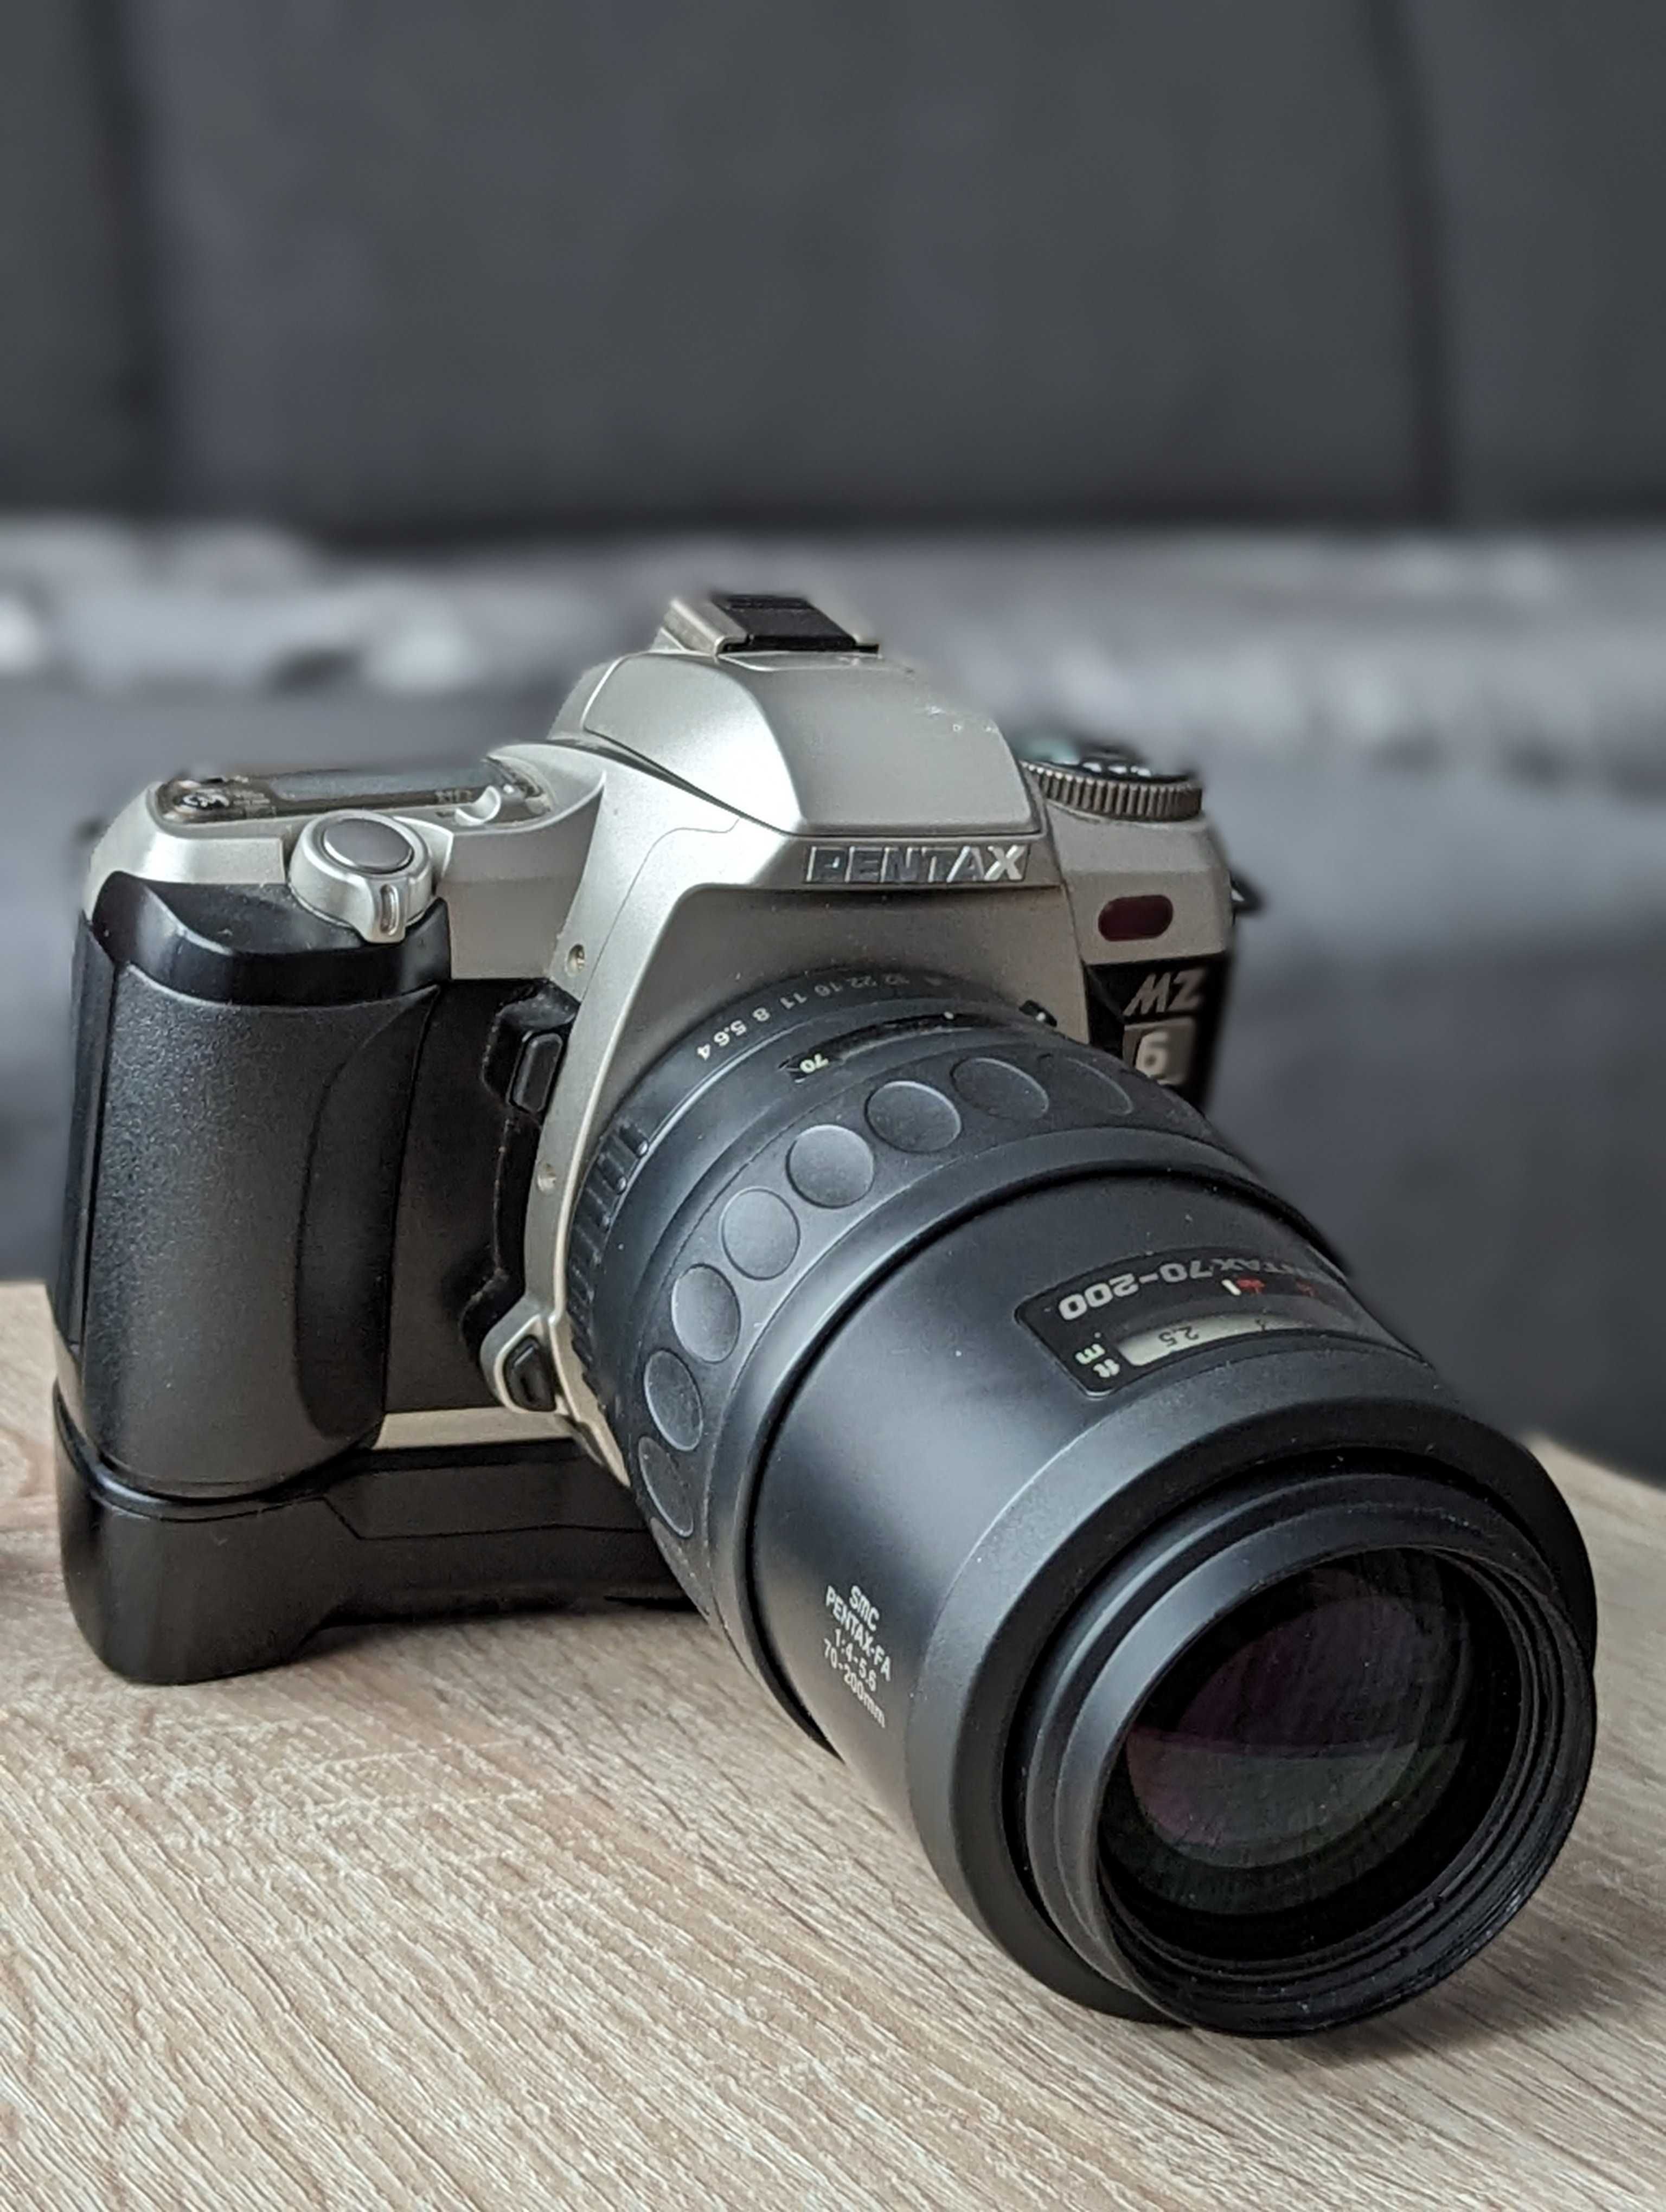 Пленочный фотоаппарат Pentax MZ-6, два объектива и батарейный блок